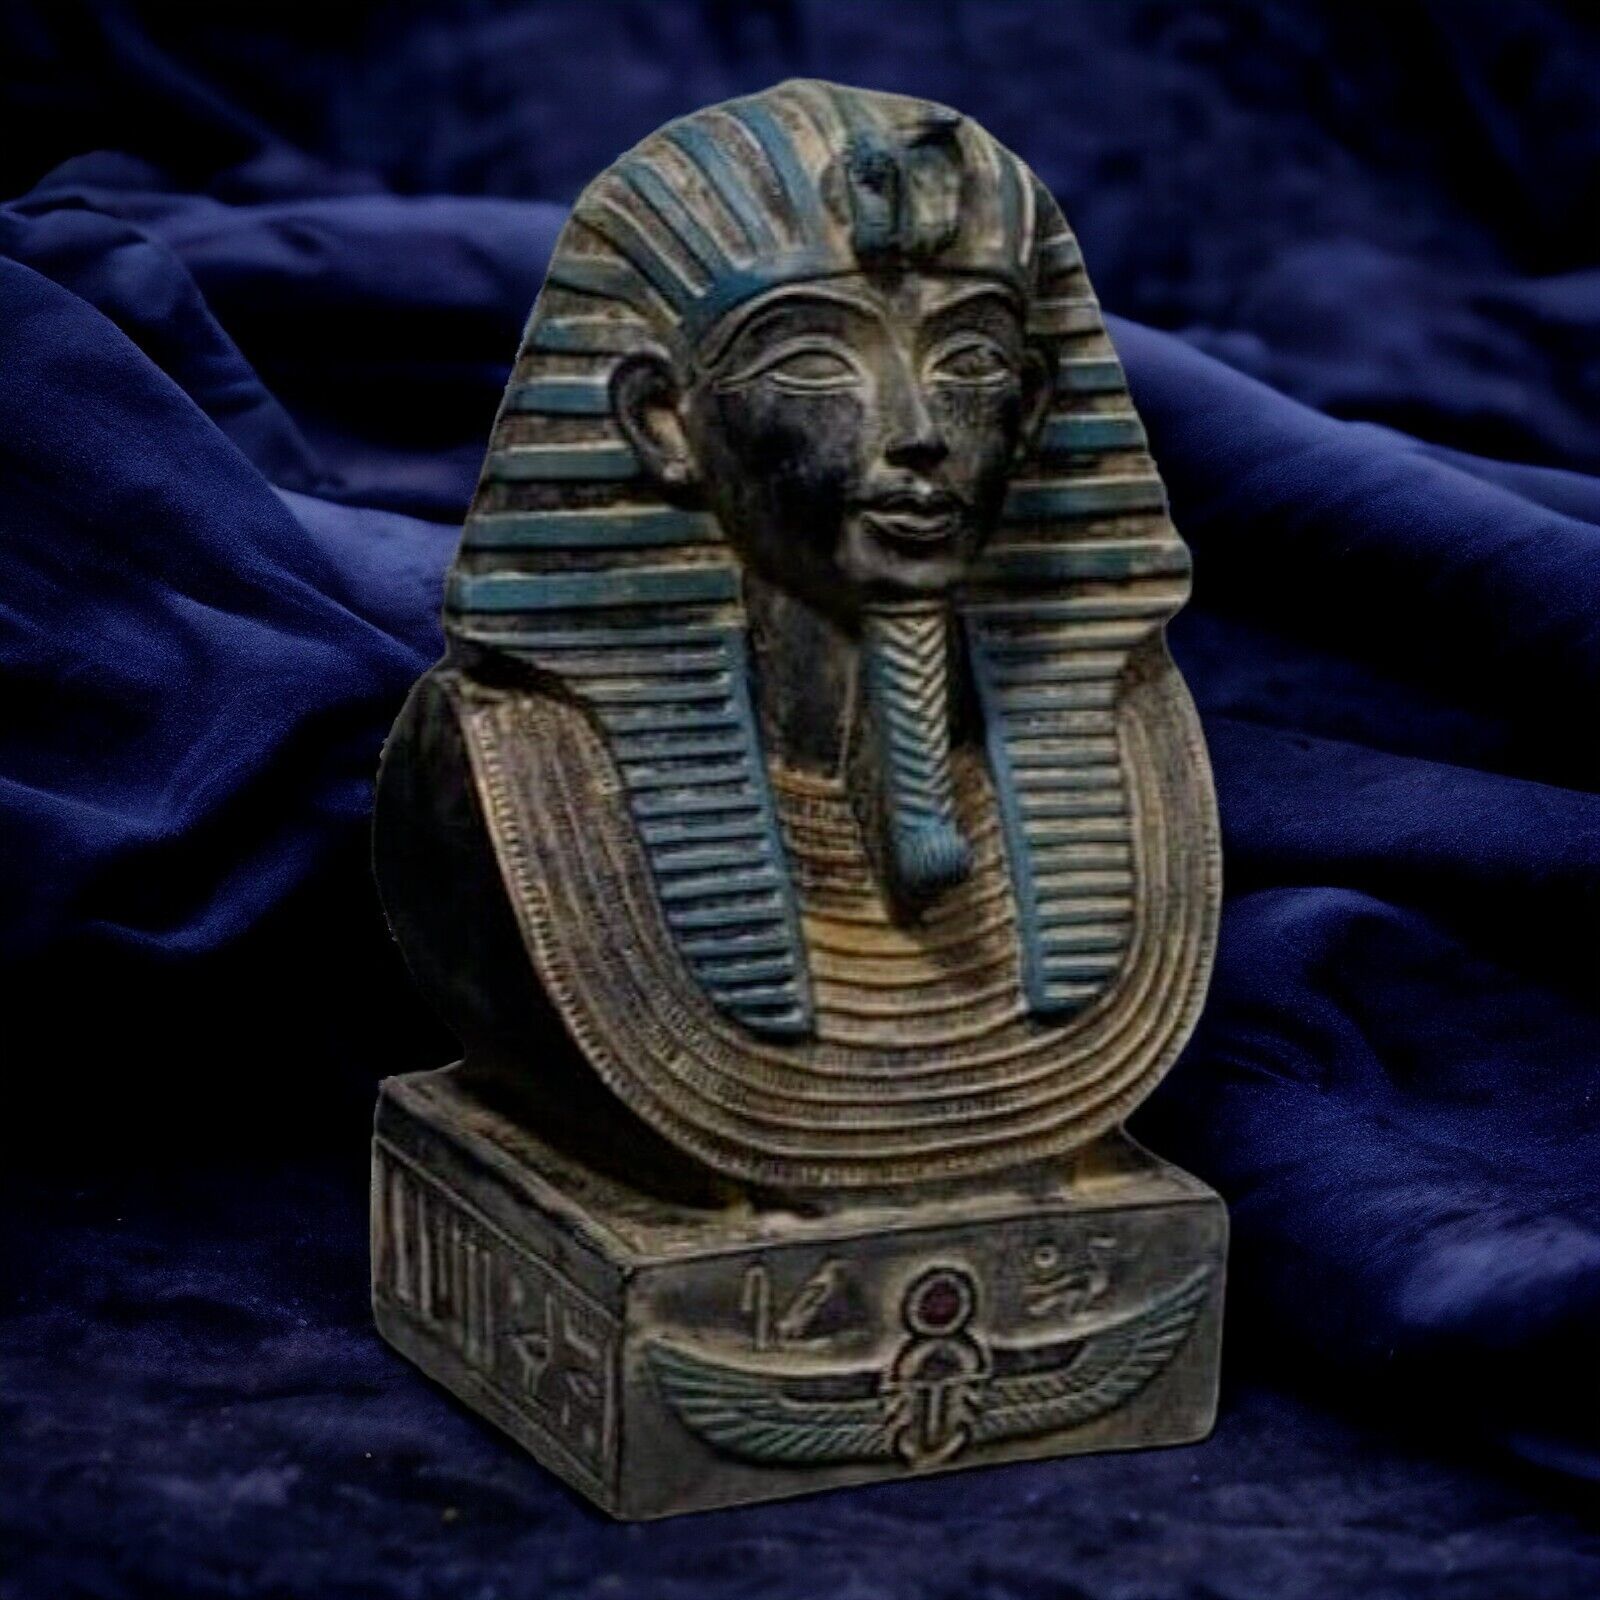 Authentic Rare Ancient Egyptian Antiquities: Exquisite Stone Statue of Pharaoh